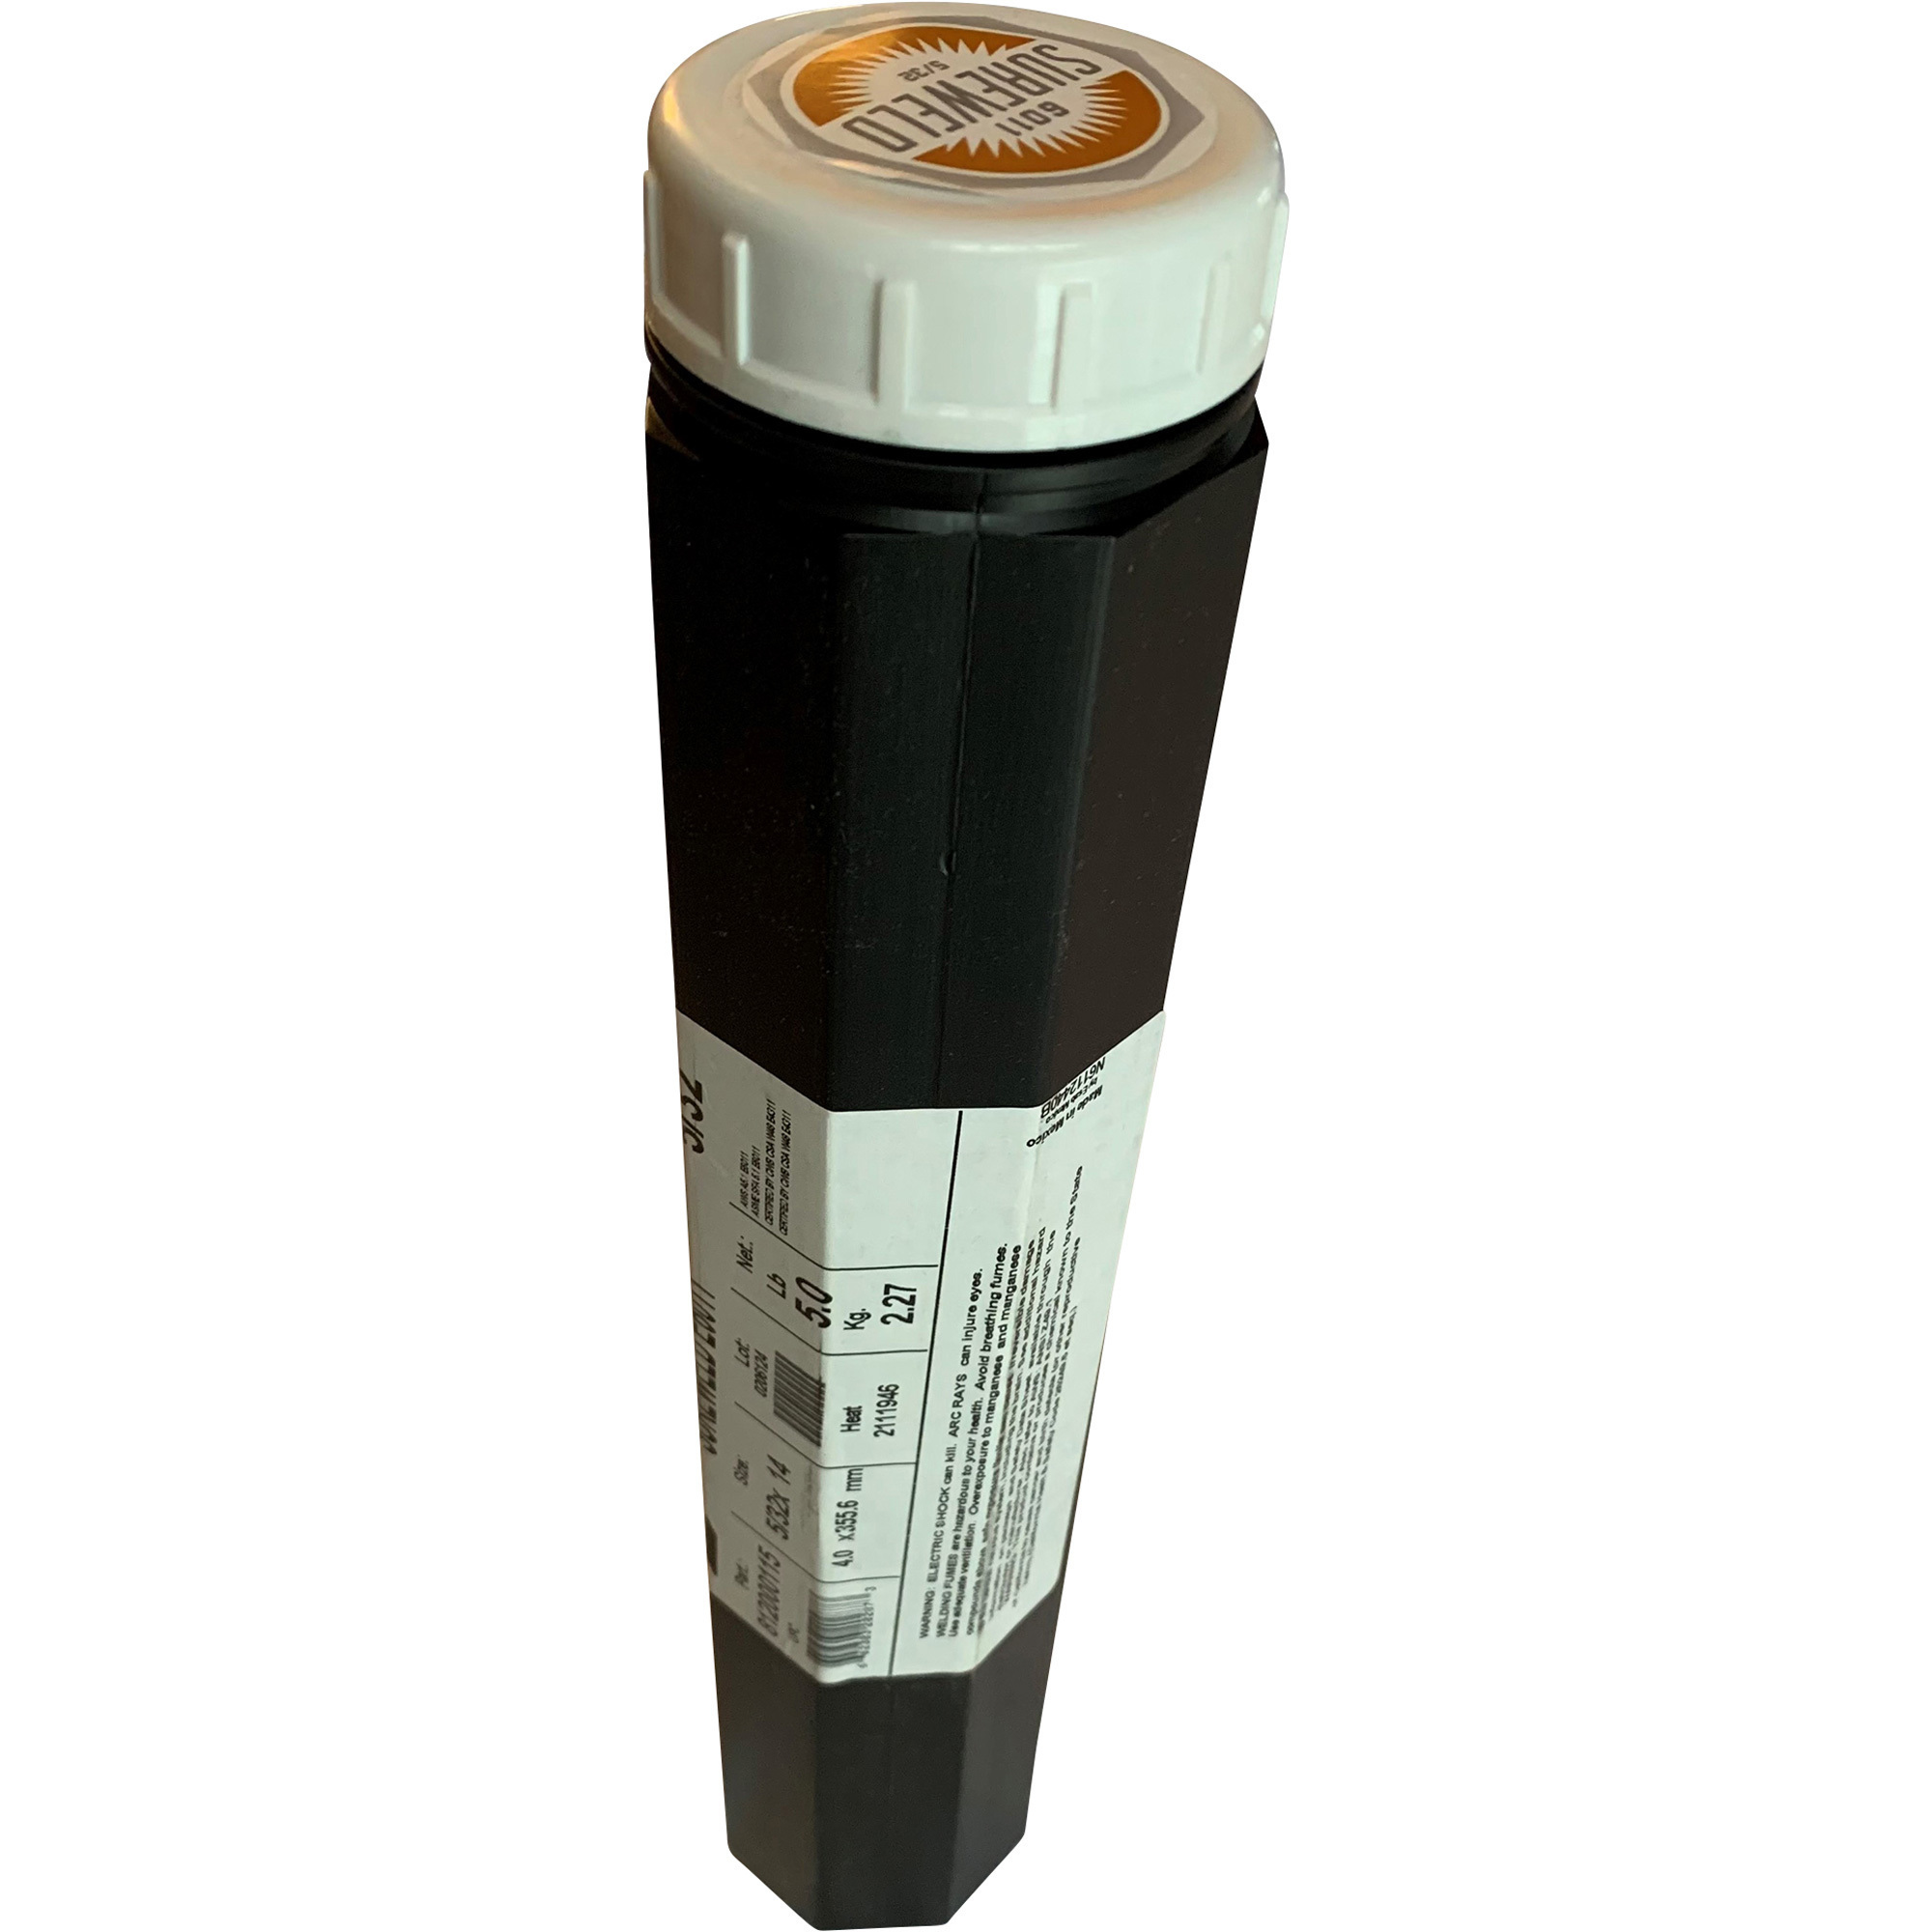 ESAB Sureweld E6011 Stick Electrodes â 3/32Inch Diameter x 14Inch L, 1-Lb. Pkg., Model 812000069